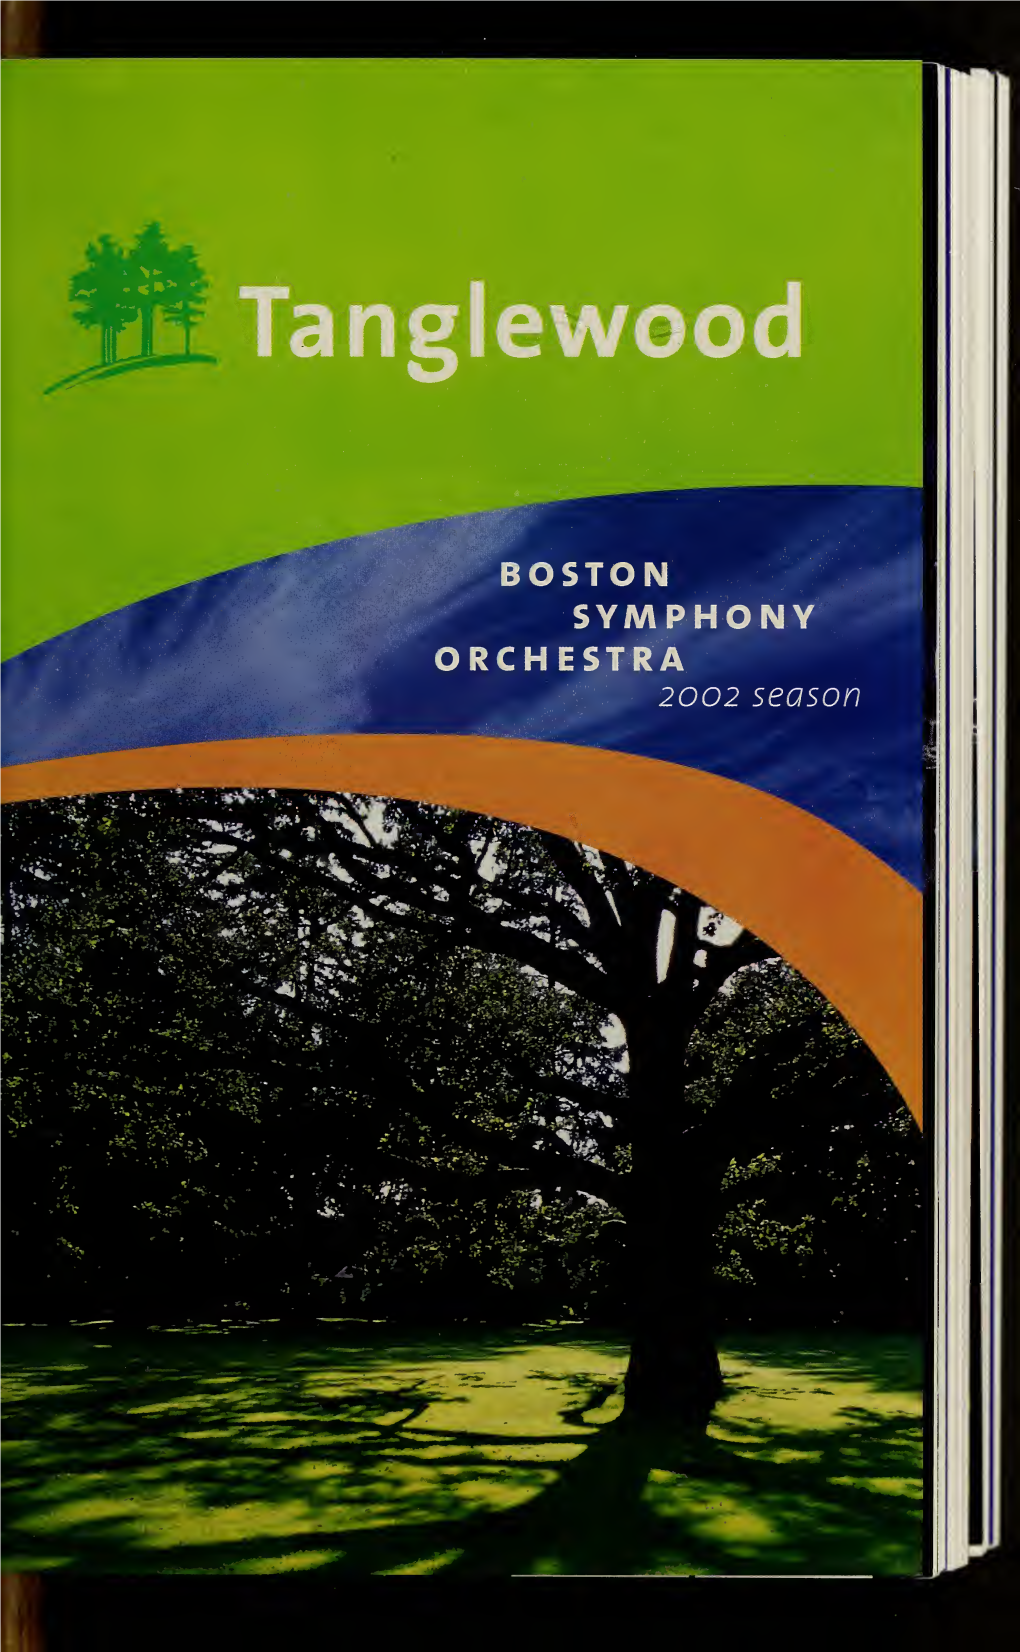 Boston Symphony Orchestra Concert Programs, Summer, 2002